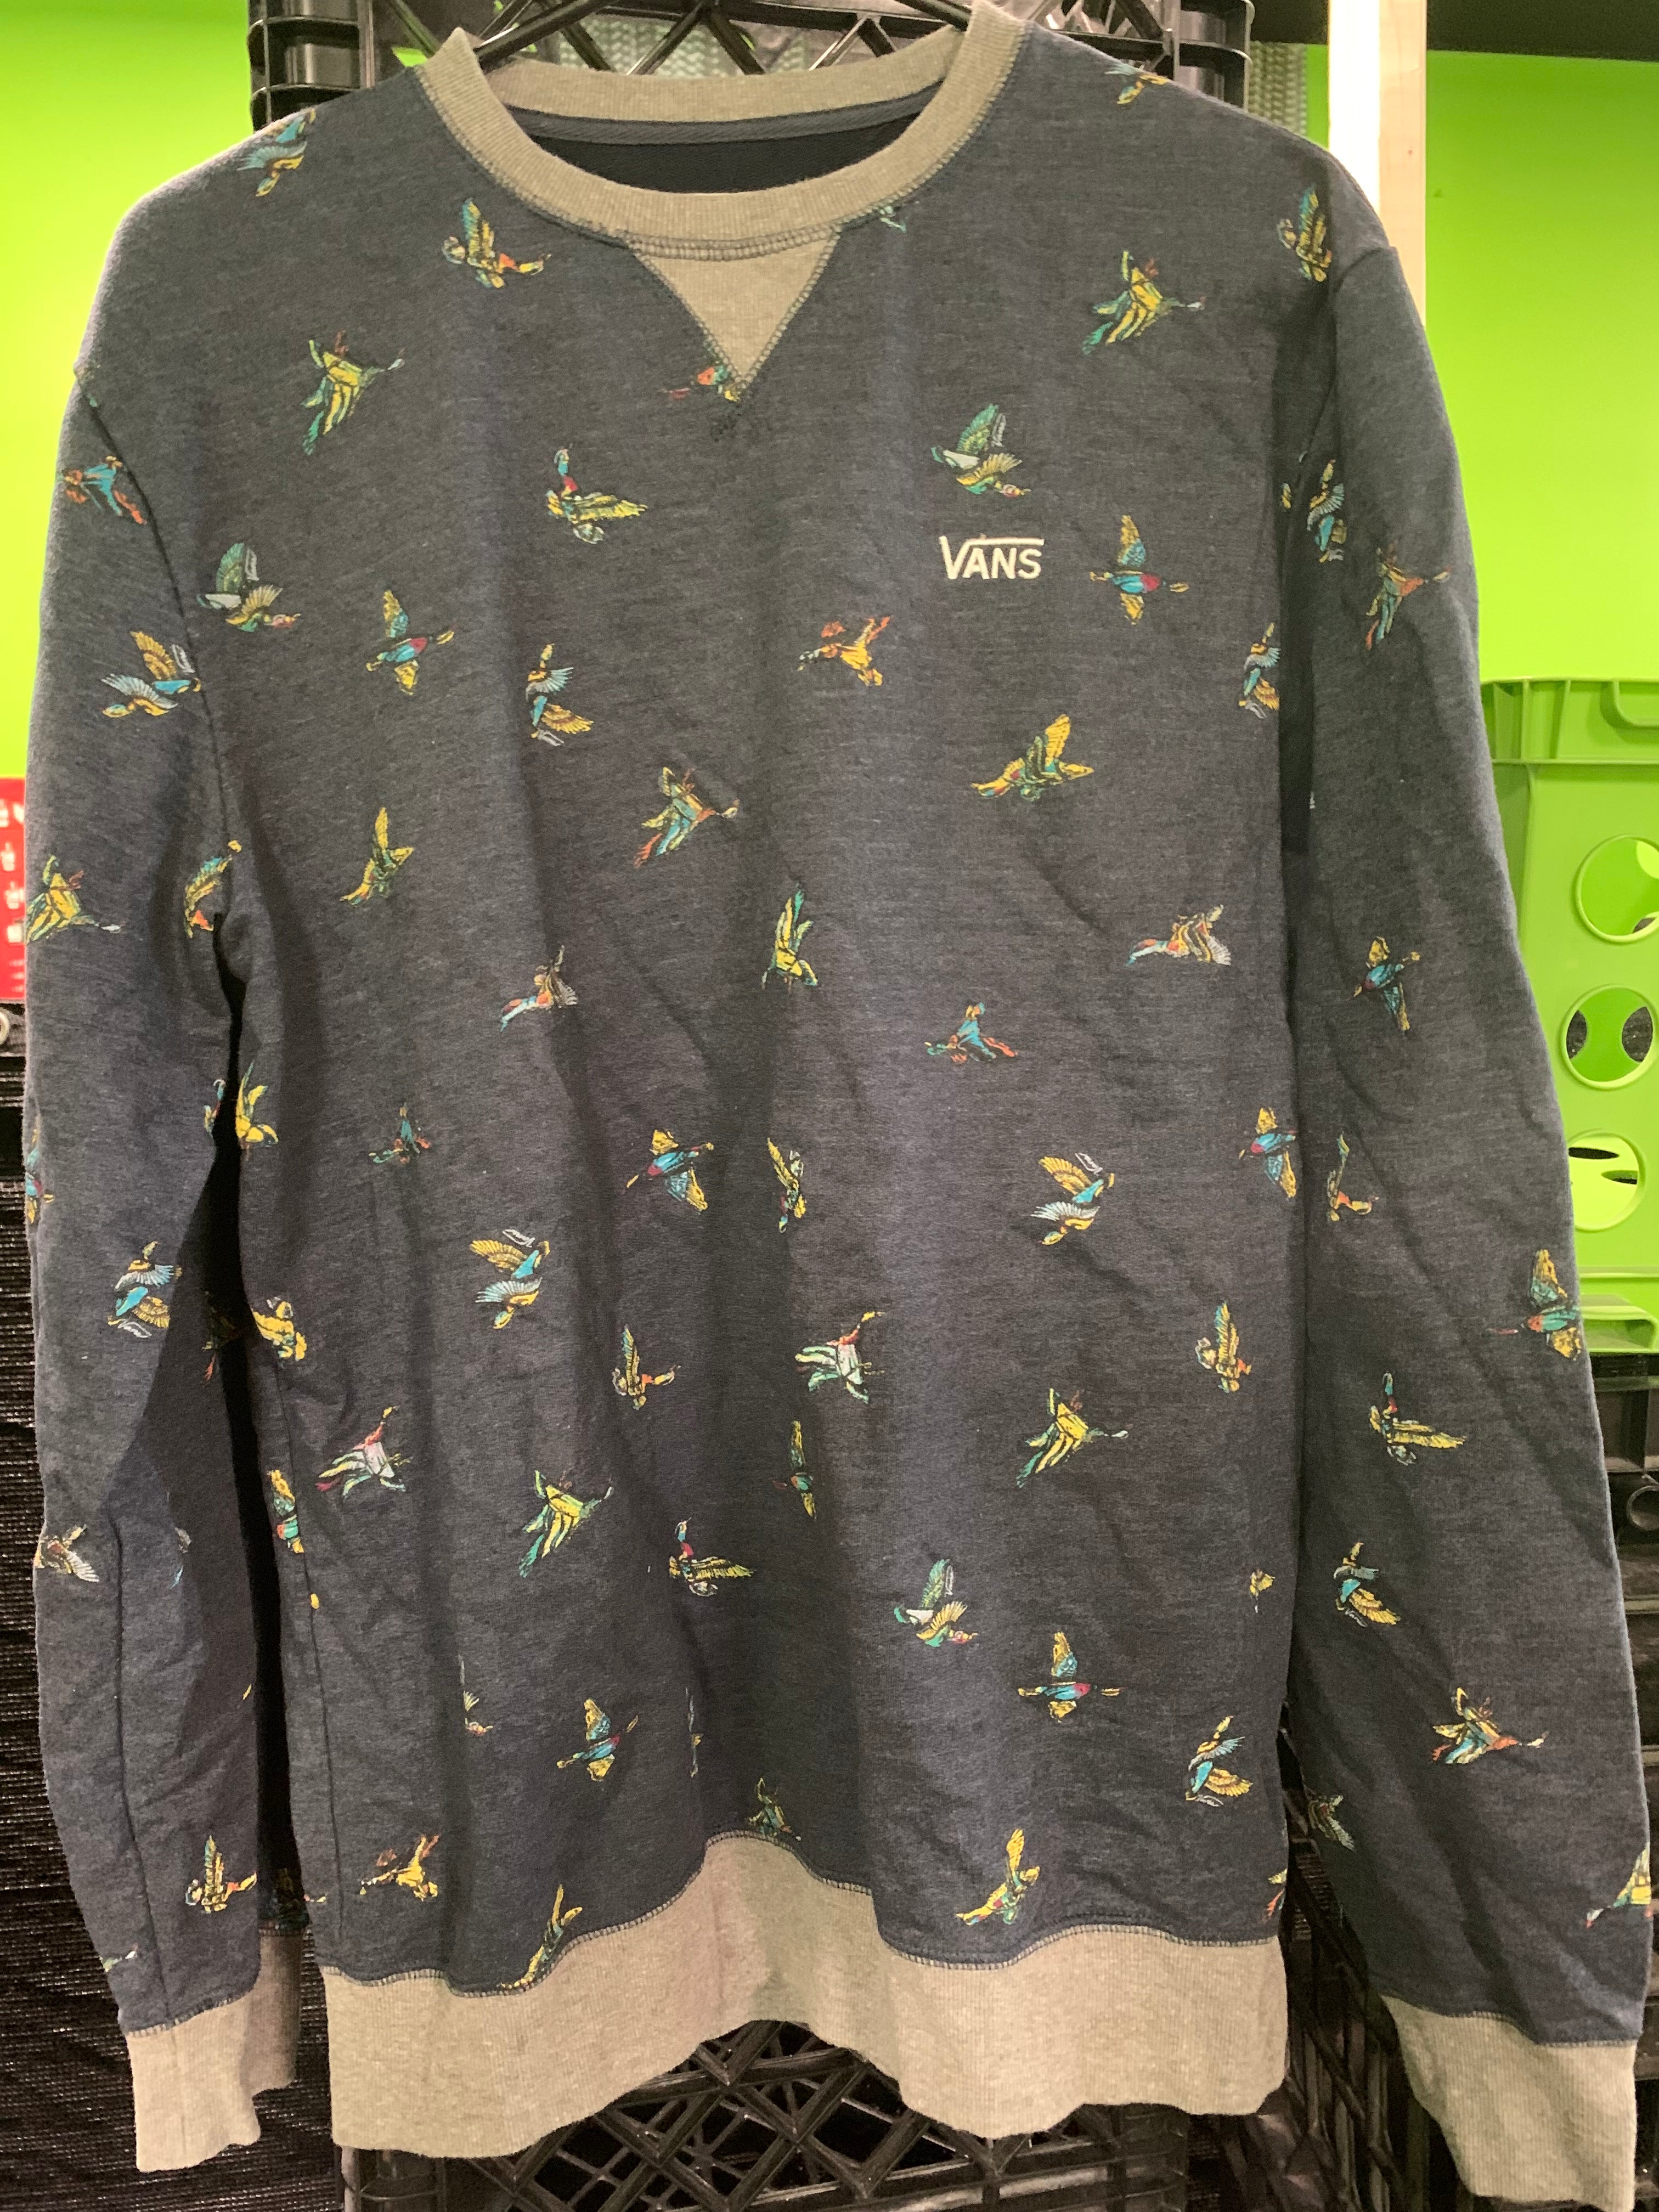 VANS Bird Longsleeve Sweatshirt, Charcoal, M